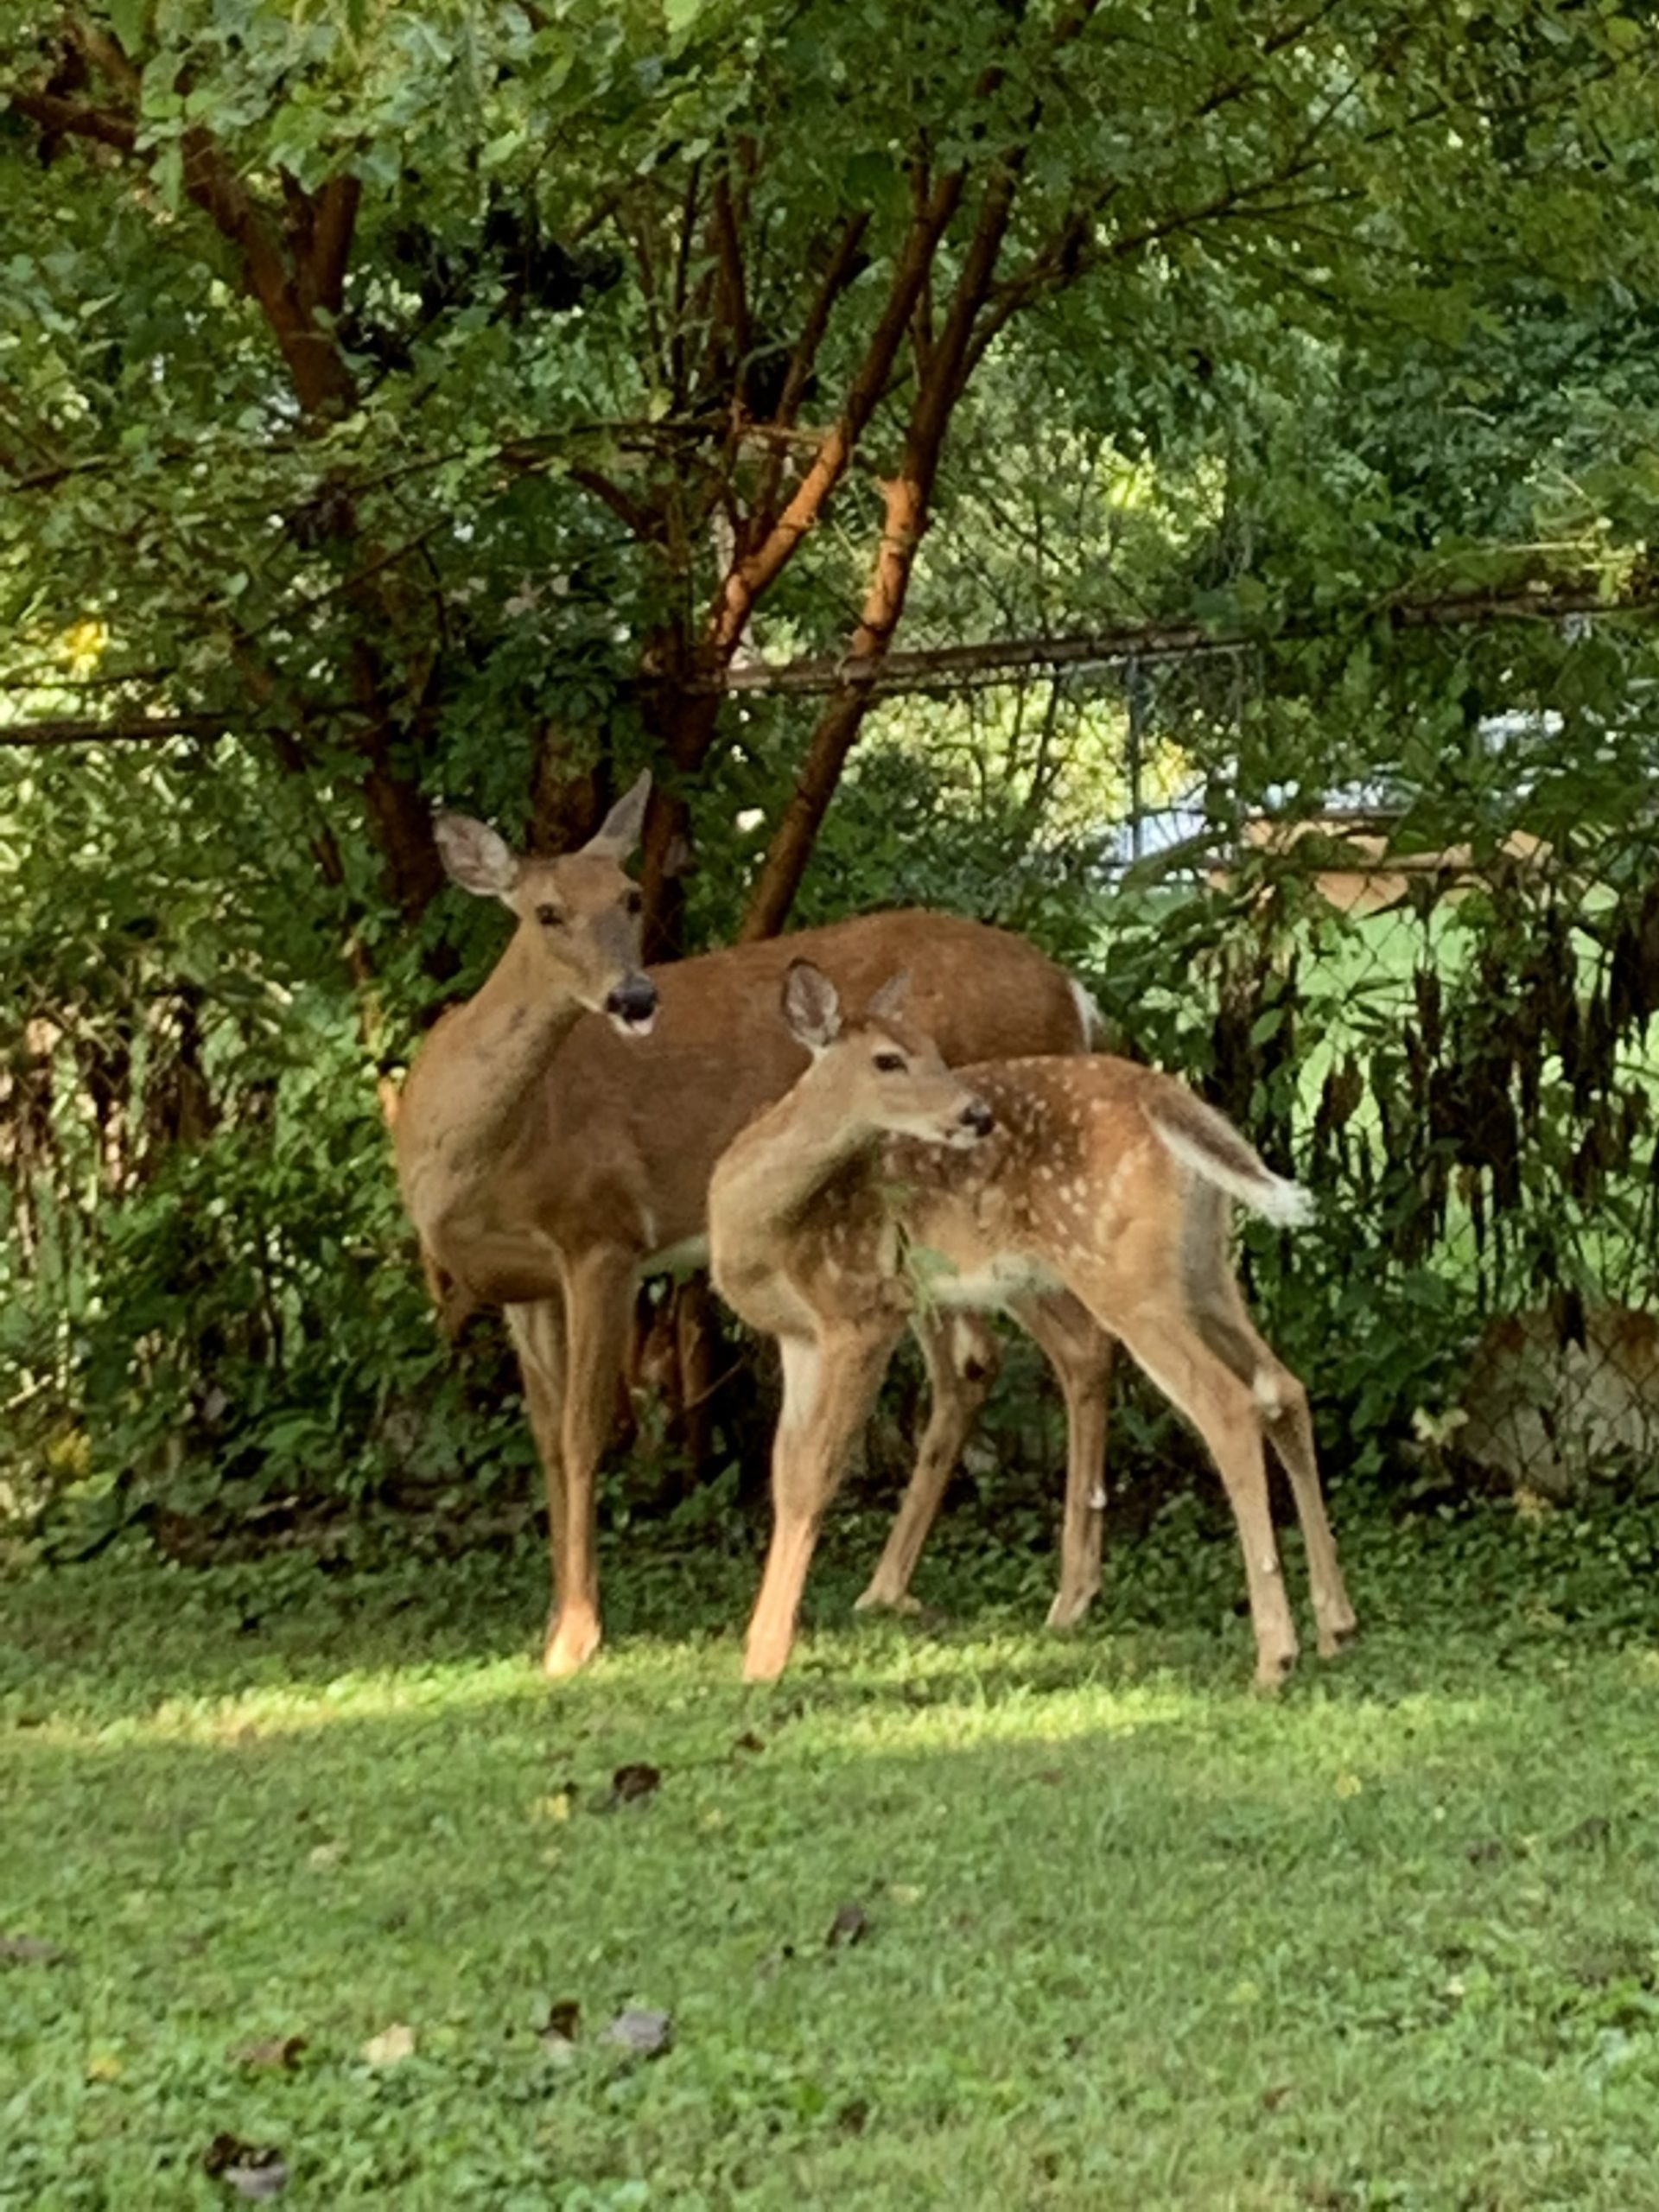 mama deer and baby looking at something